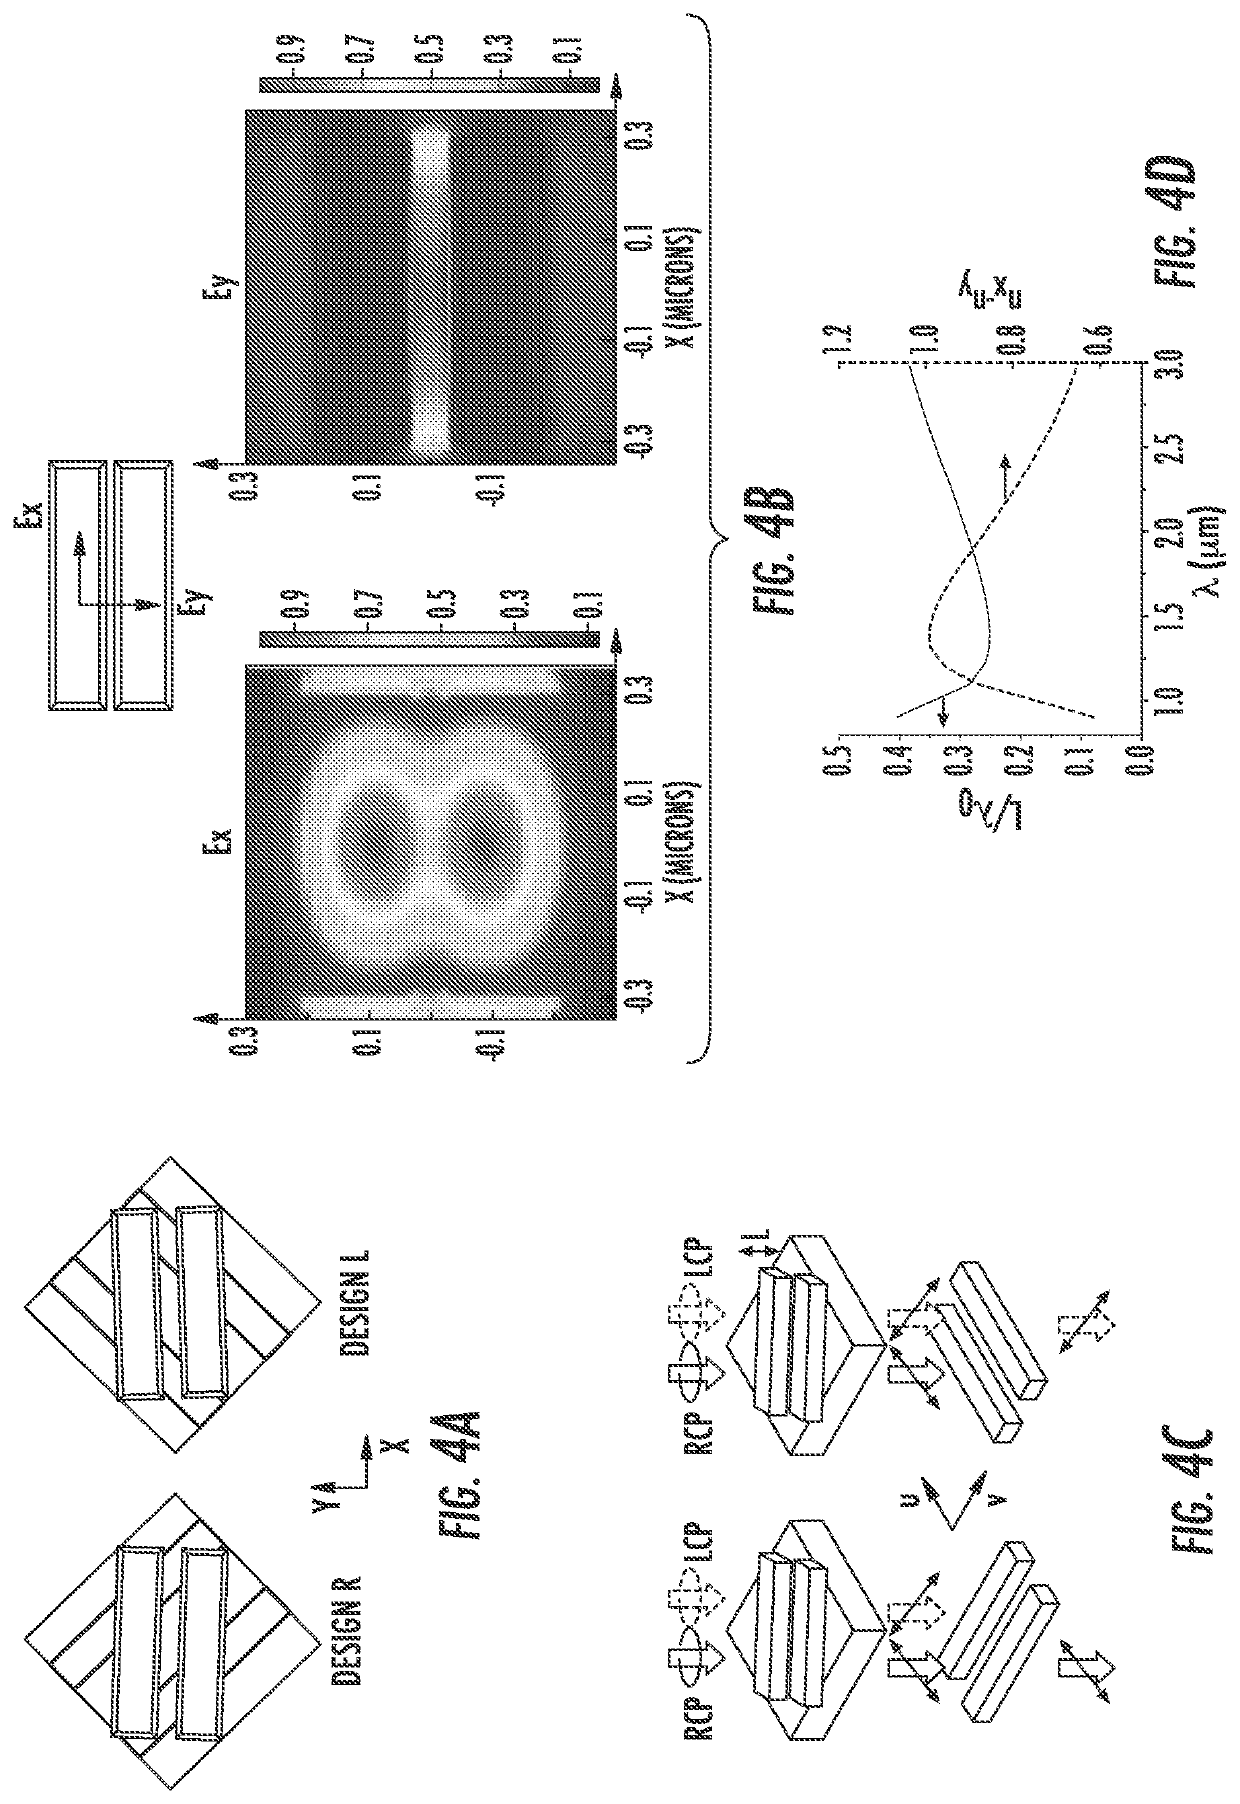 On-chip polarization detection and polarimetric imaging